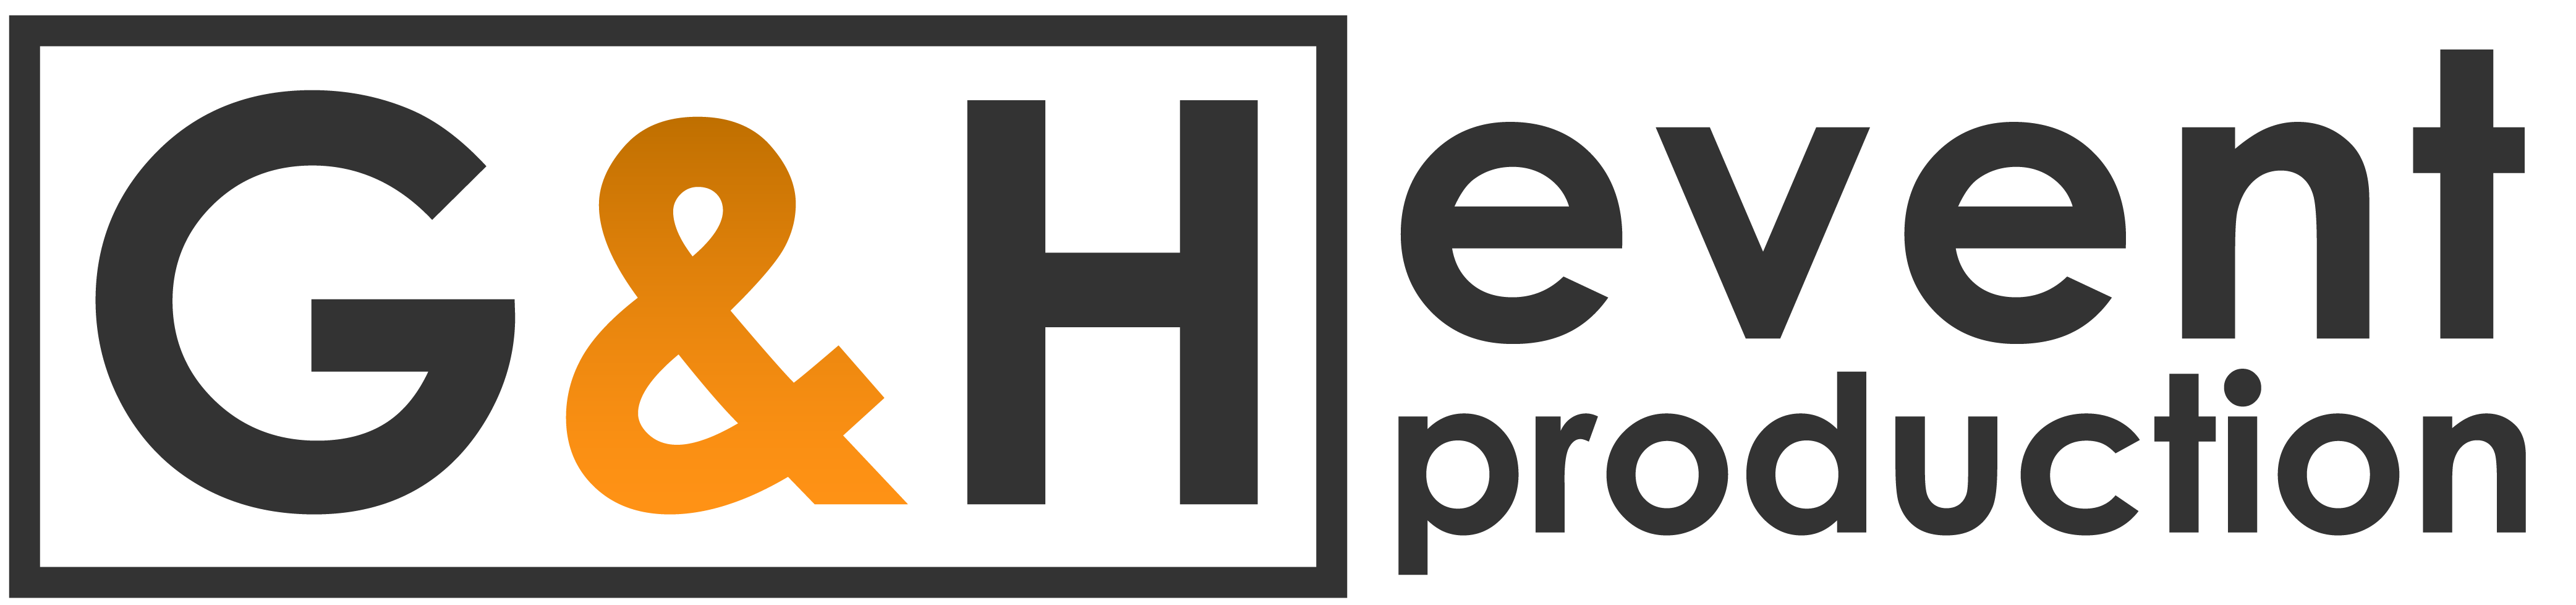 Logo G&H event production